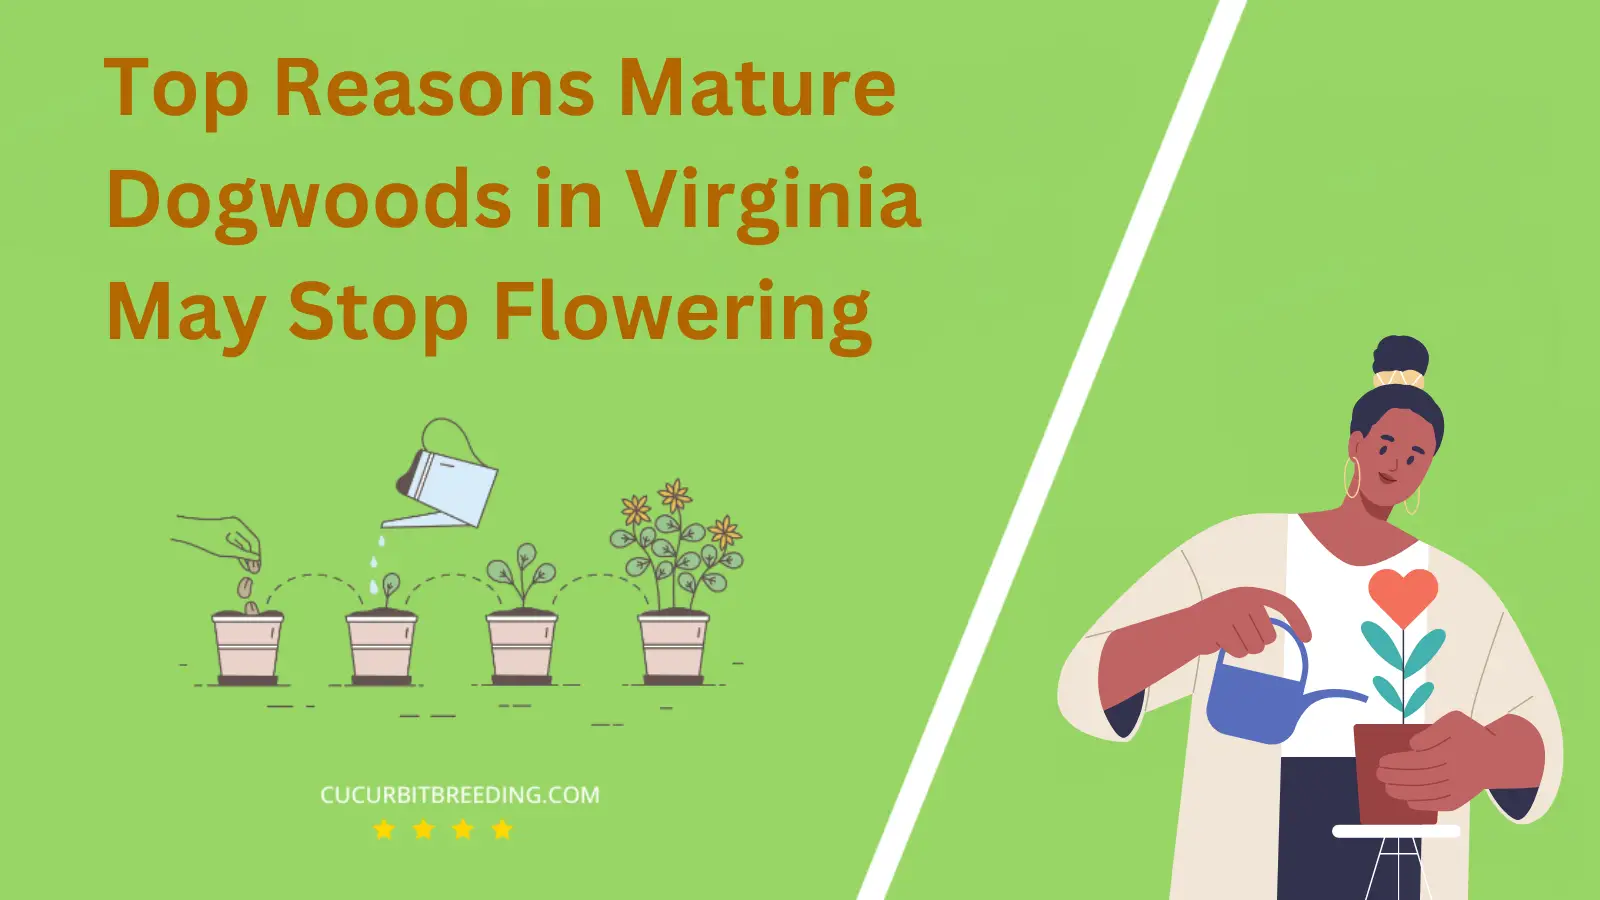 Top Reasons Mature Dogwoods in Virginia May Stop Flowering